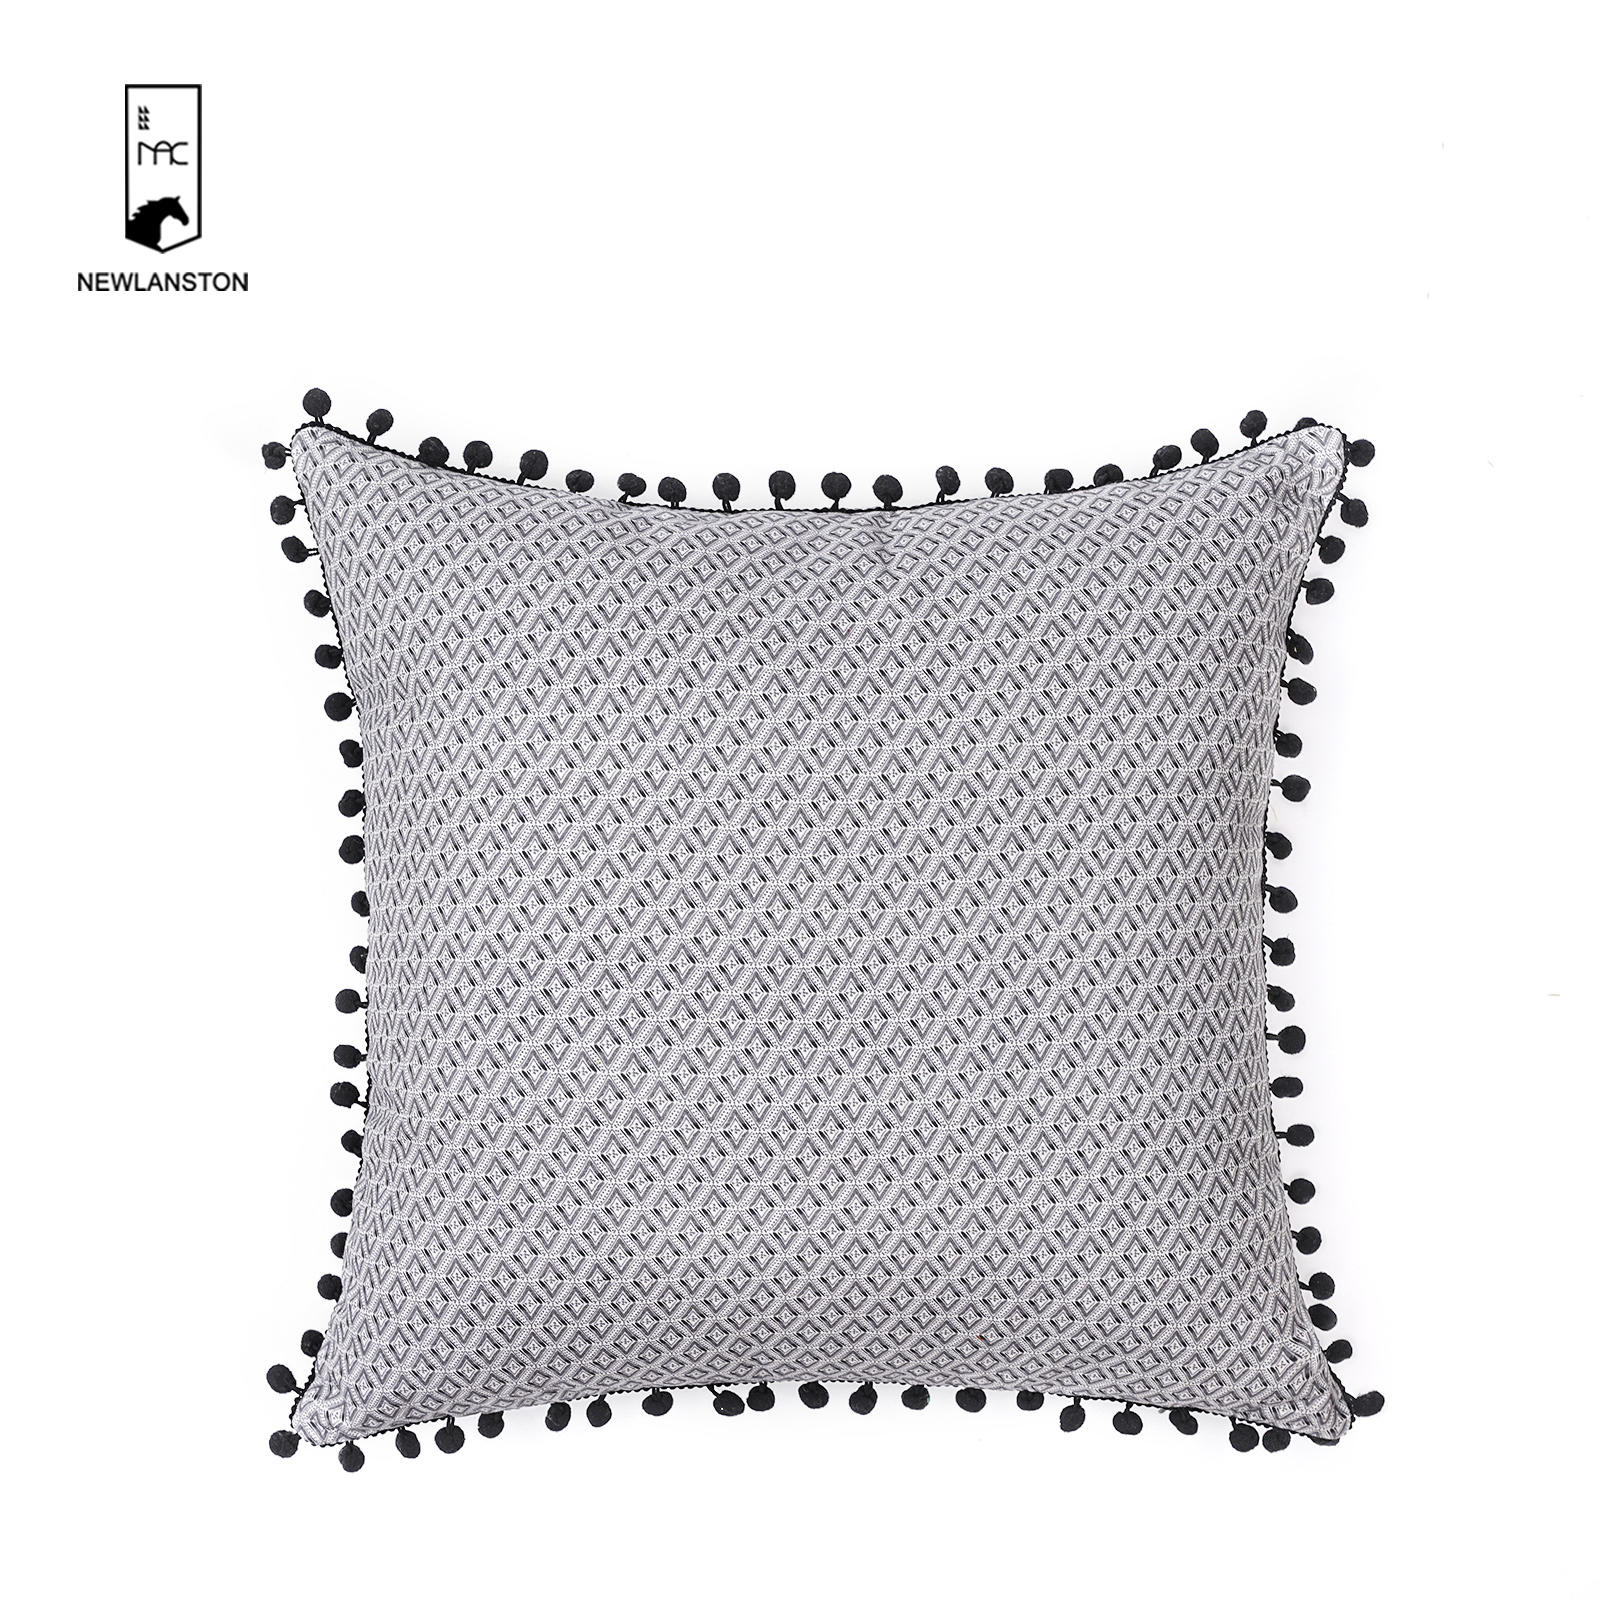 45x45 Digital printing cotton Geometric style Cushion cover 